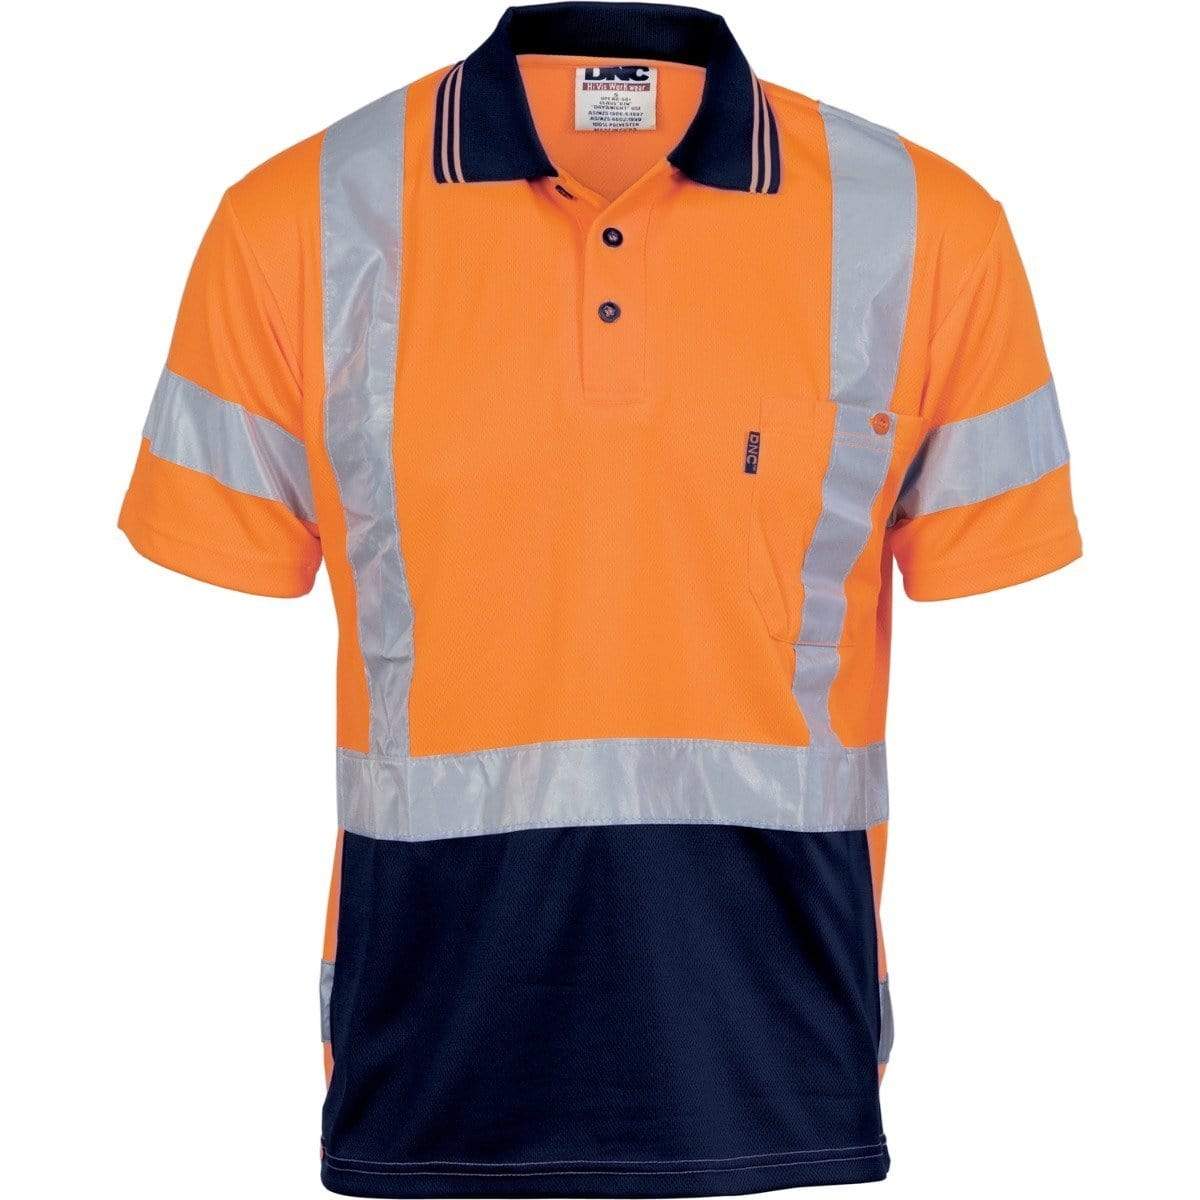 Dnc Workwear Hi-vis D/n Cool Breathe Short Sleeve Polo Shirt With Cross-back Reflective Tape - 3712 Work Wear DNC Workwear Orange 5XL 